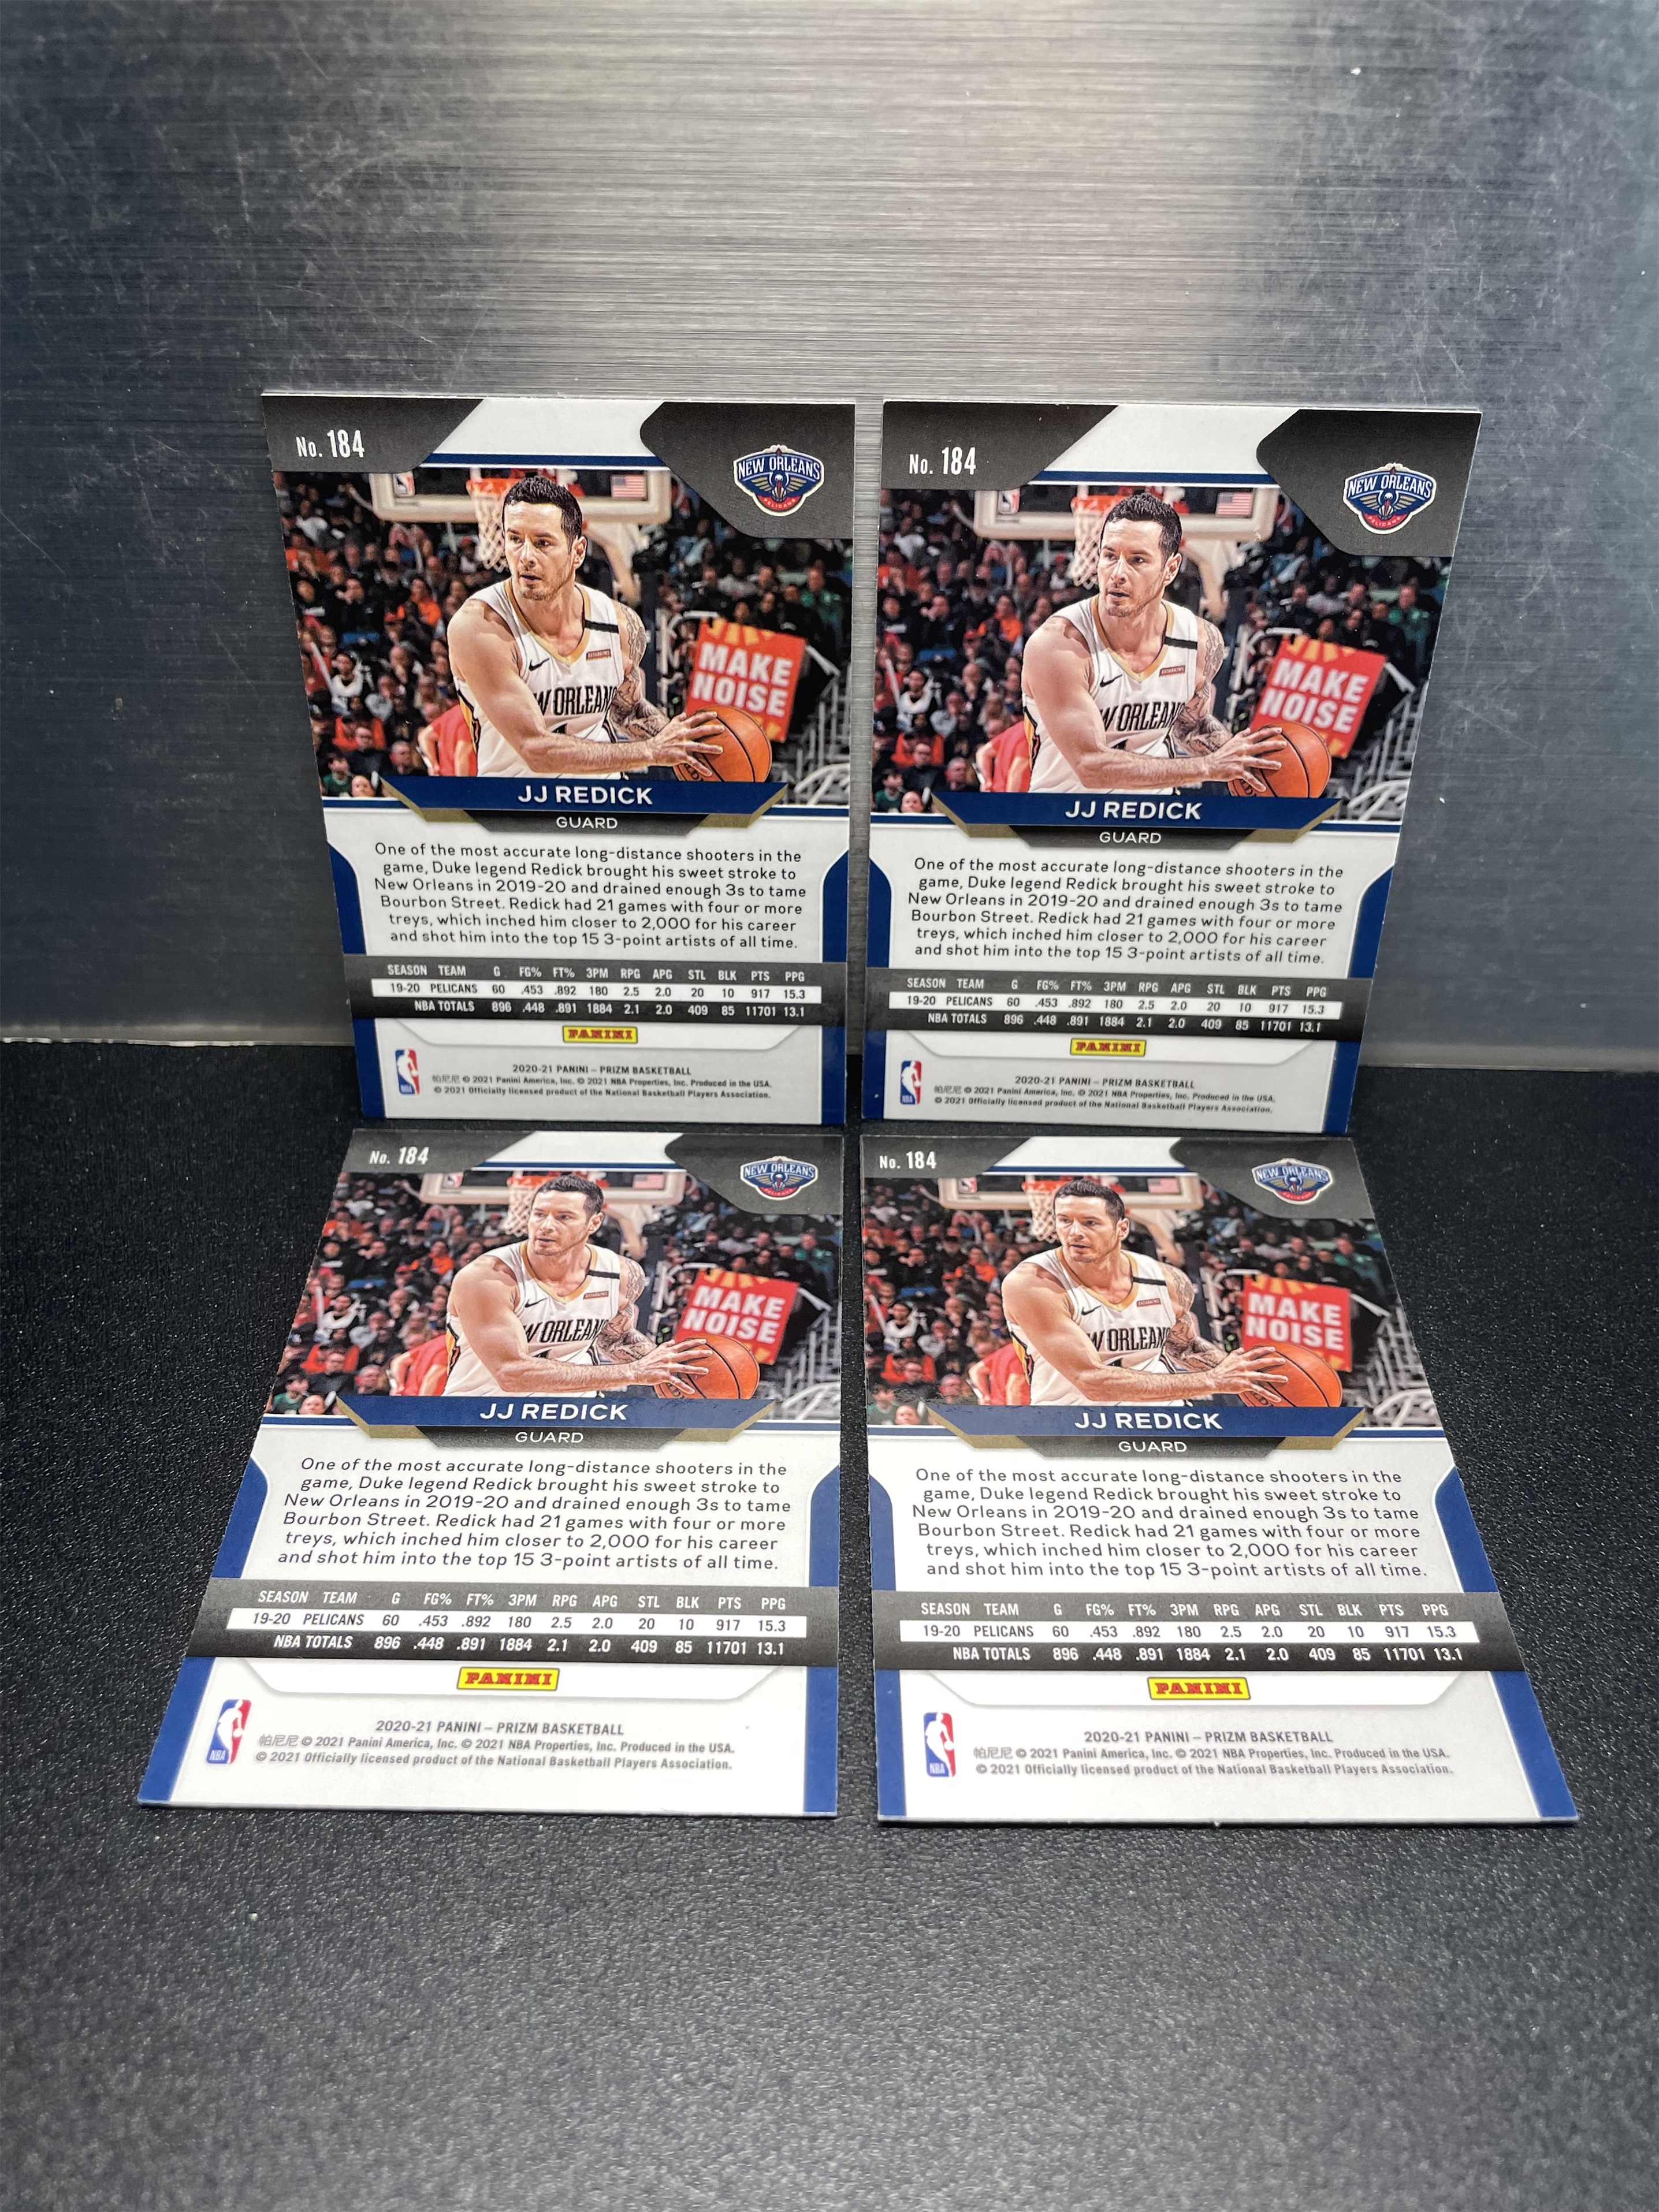 (S6) 2020-21 PANINI PRIZM BASE  JJ 雷迪克  鹈鹕 近期大热球星  一图lot 收藏必备 卡品如图 !!！